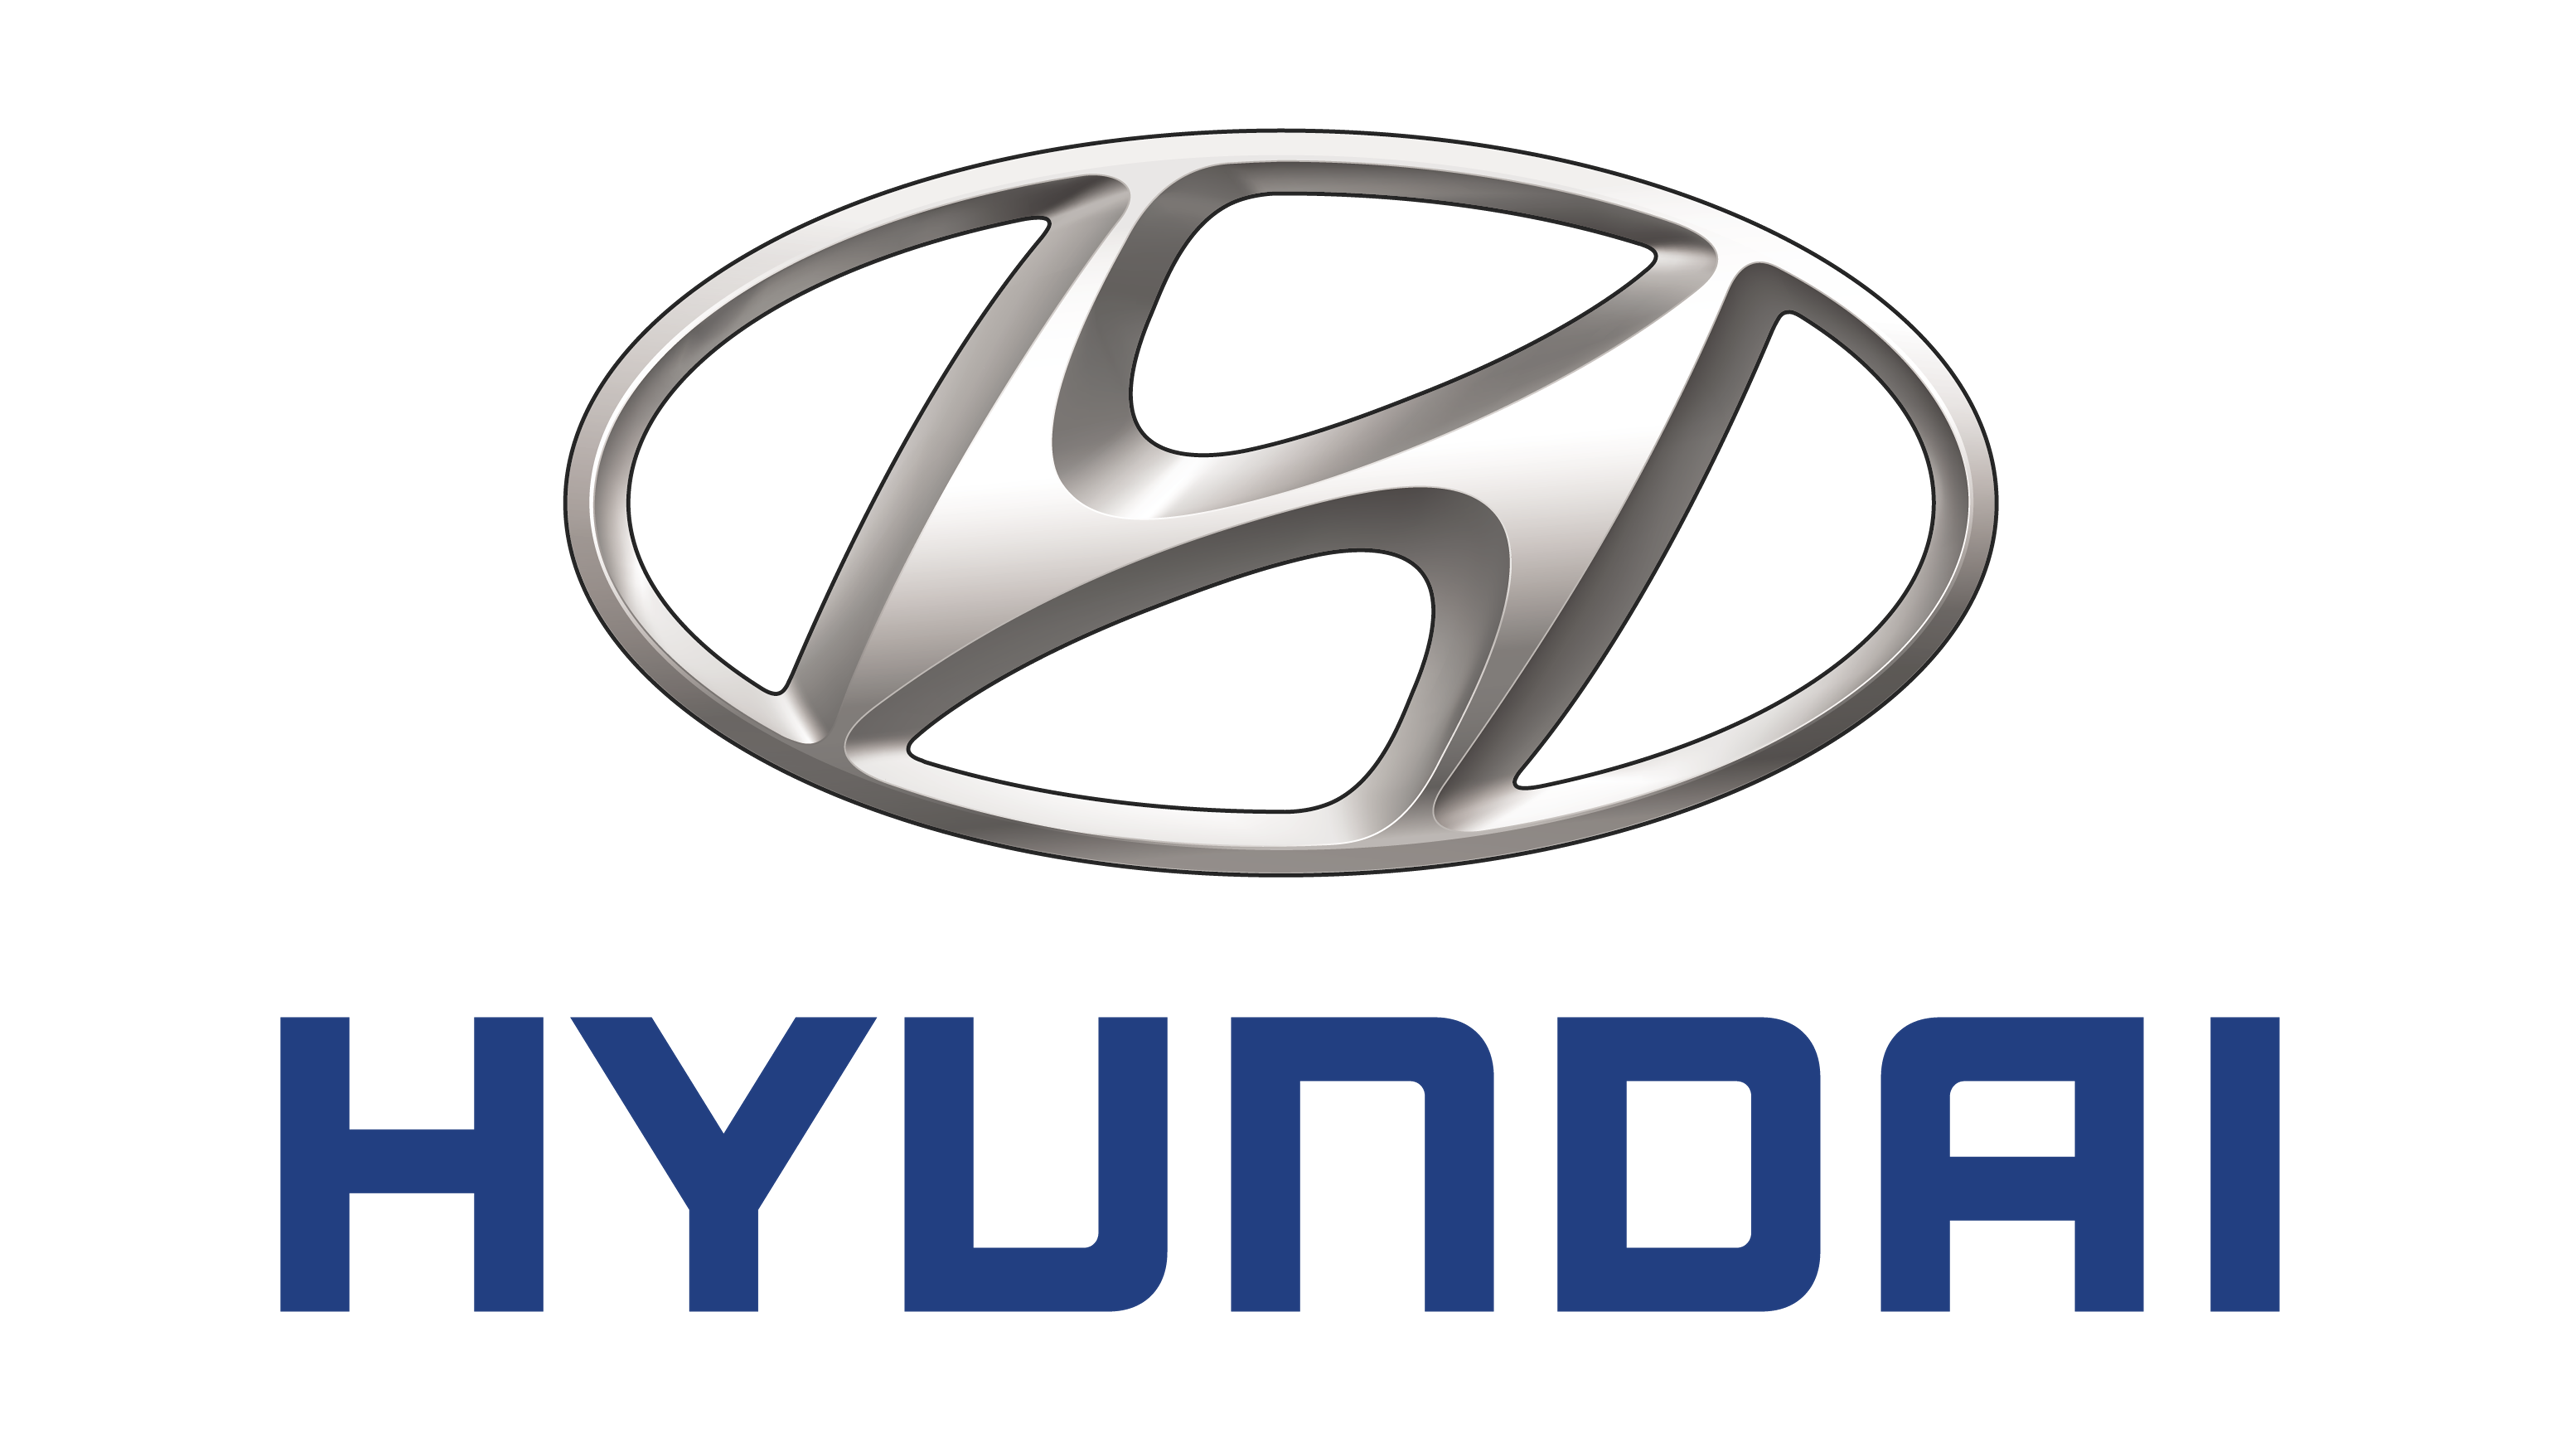 Business Car Company Hyundai Cars Motor Automotive Clipart